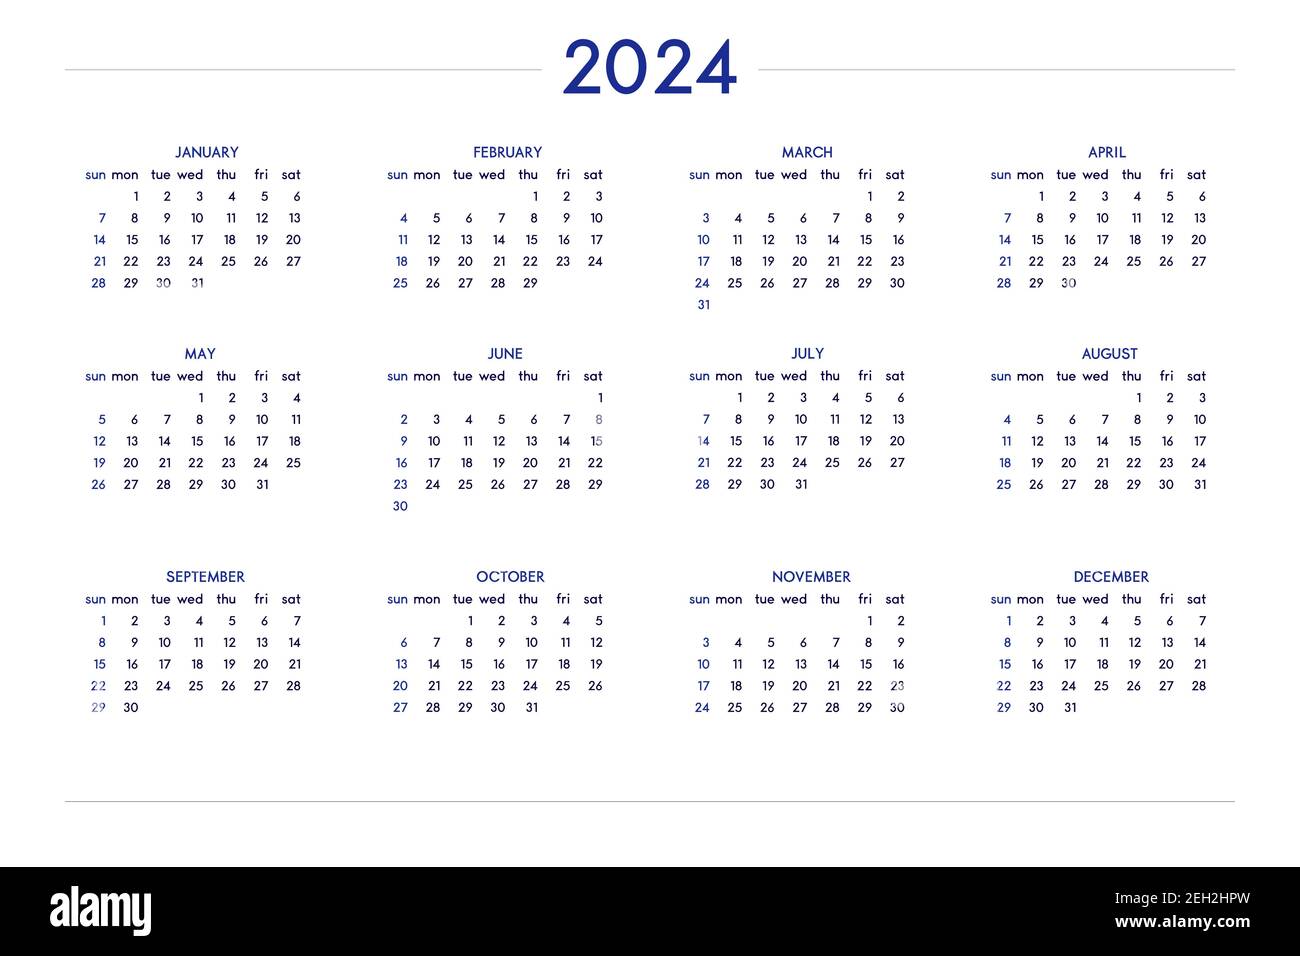 2024 calendar Stock Vector Images - Alamy